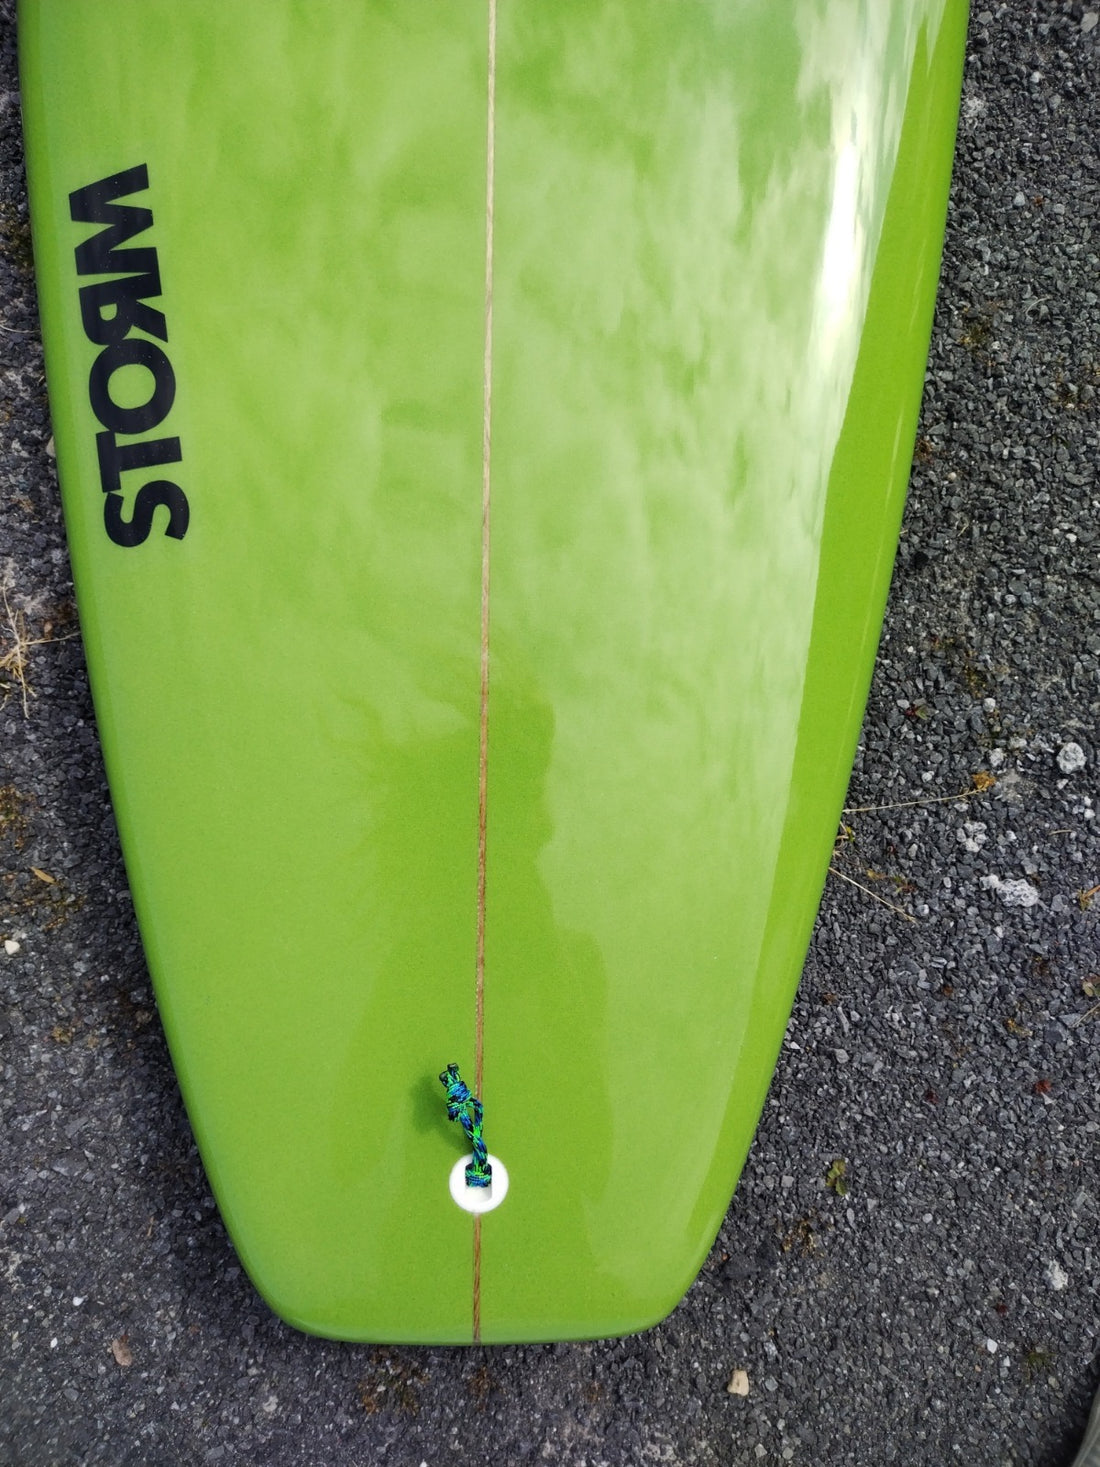 Storm Surfboards 6'10 Beluga Mini Mal Surfboard Design LB20